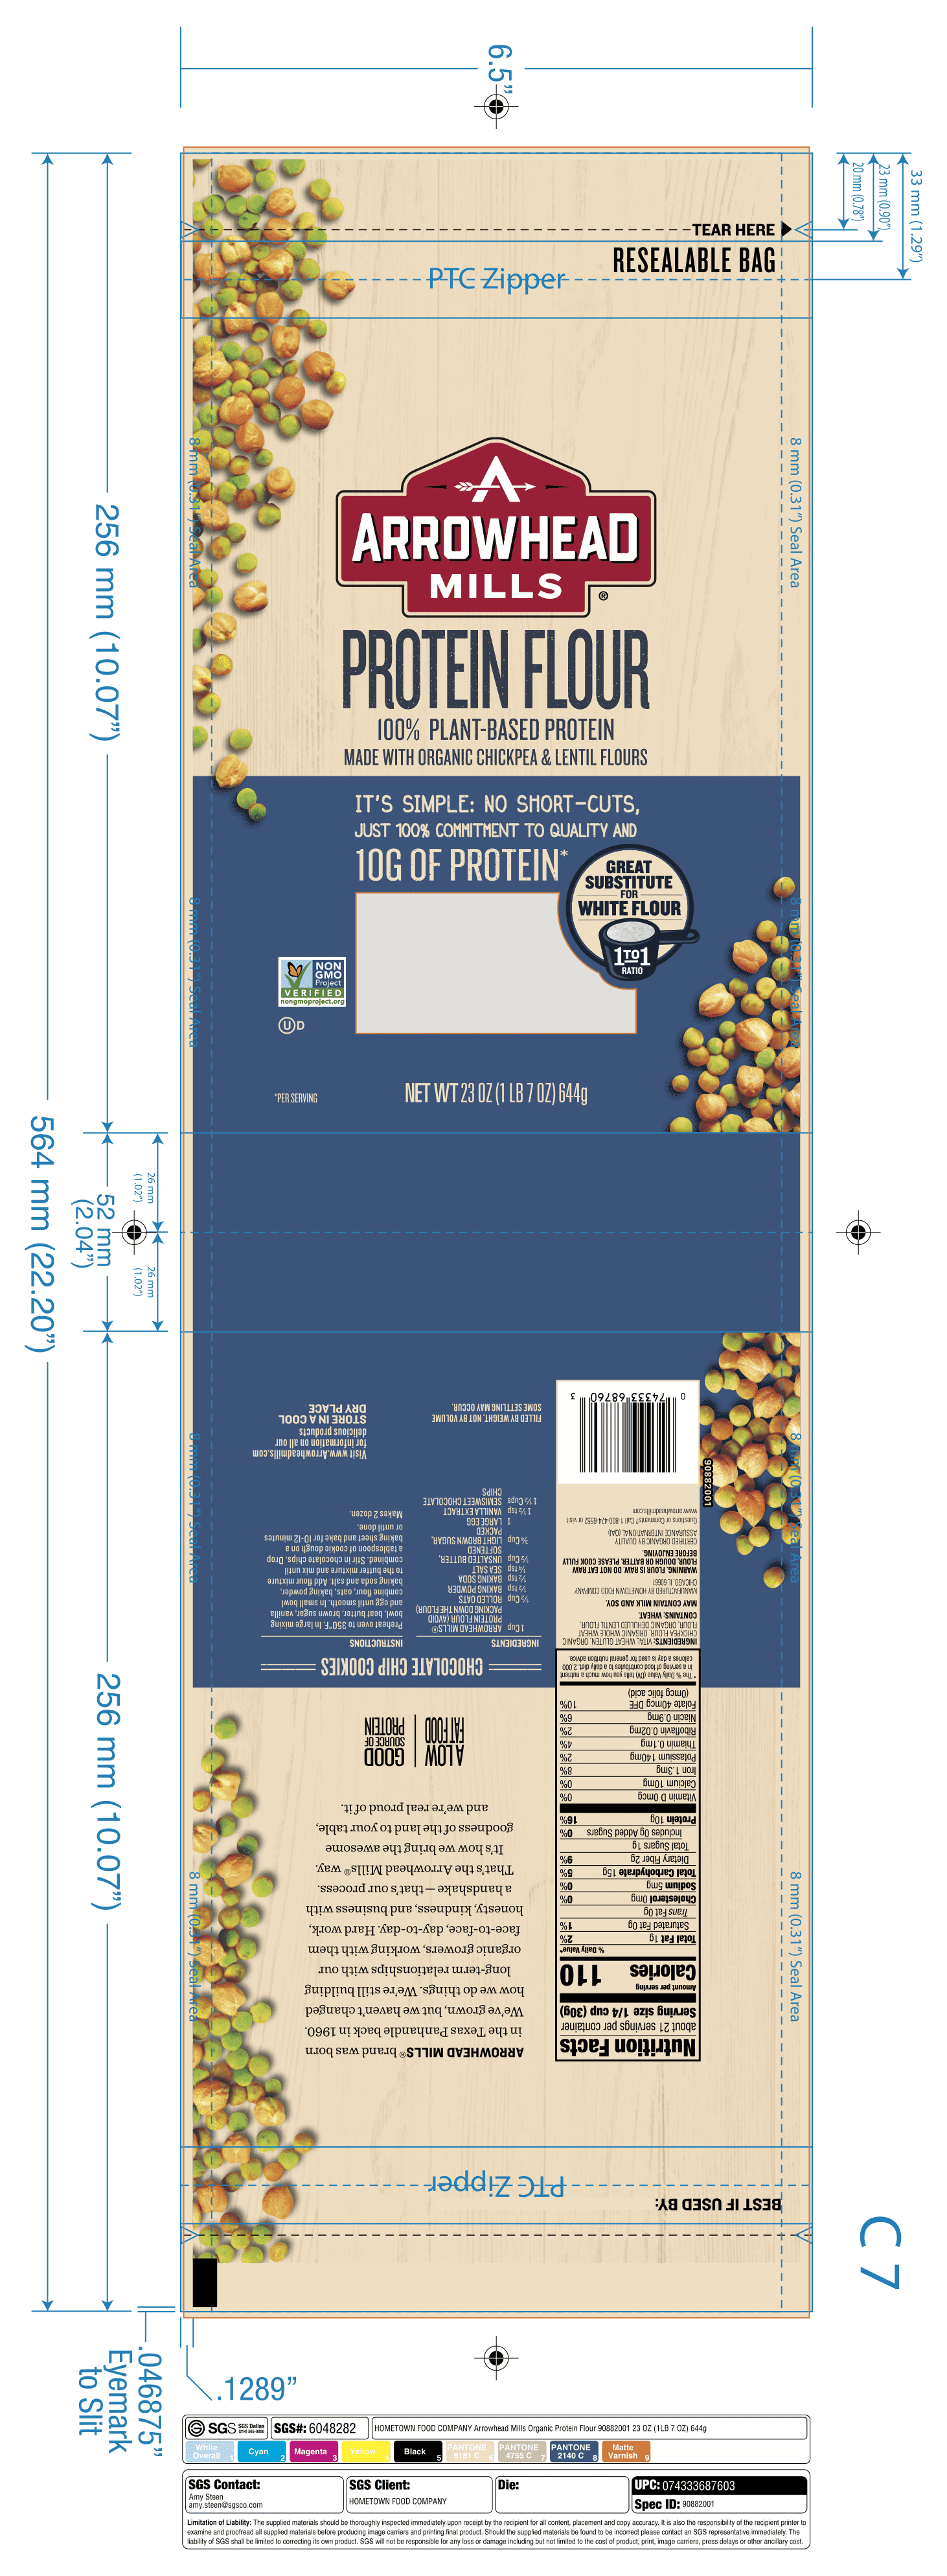 Arrowhead Mills Protein Flour 6 units per case 23.0 oz Product Label